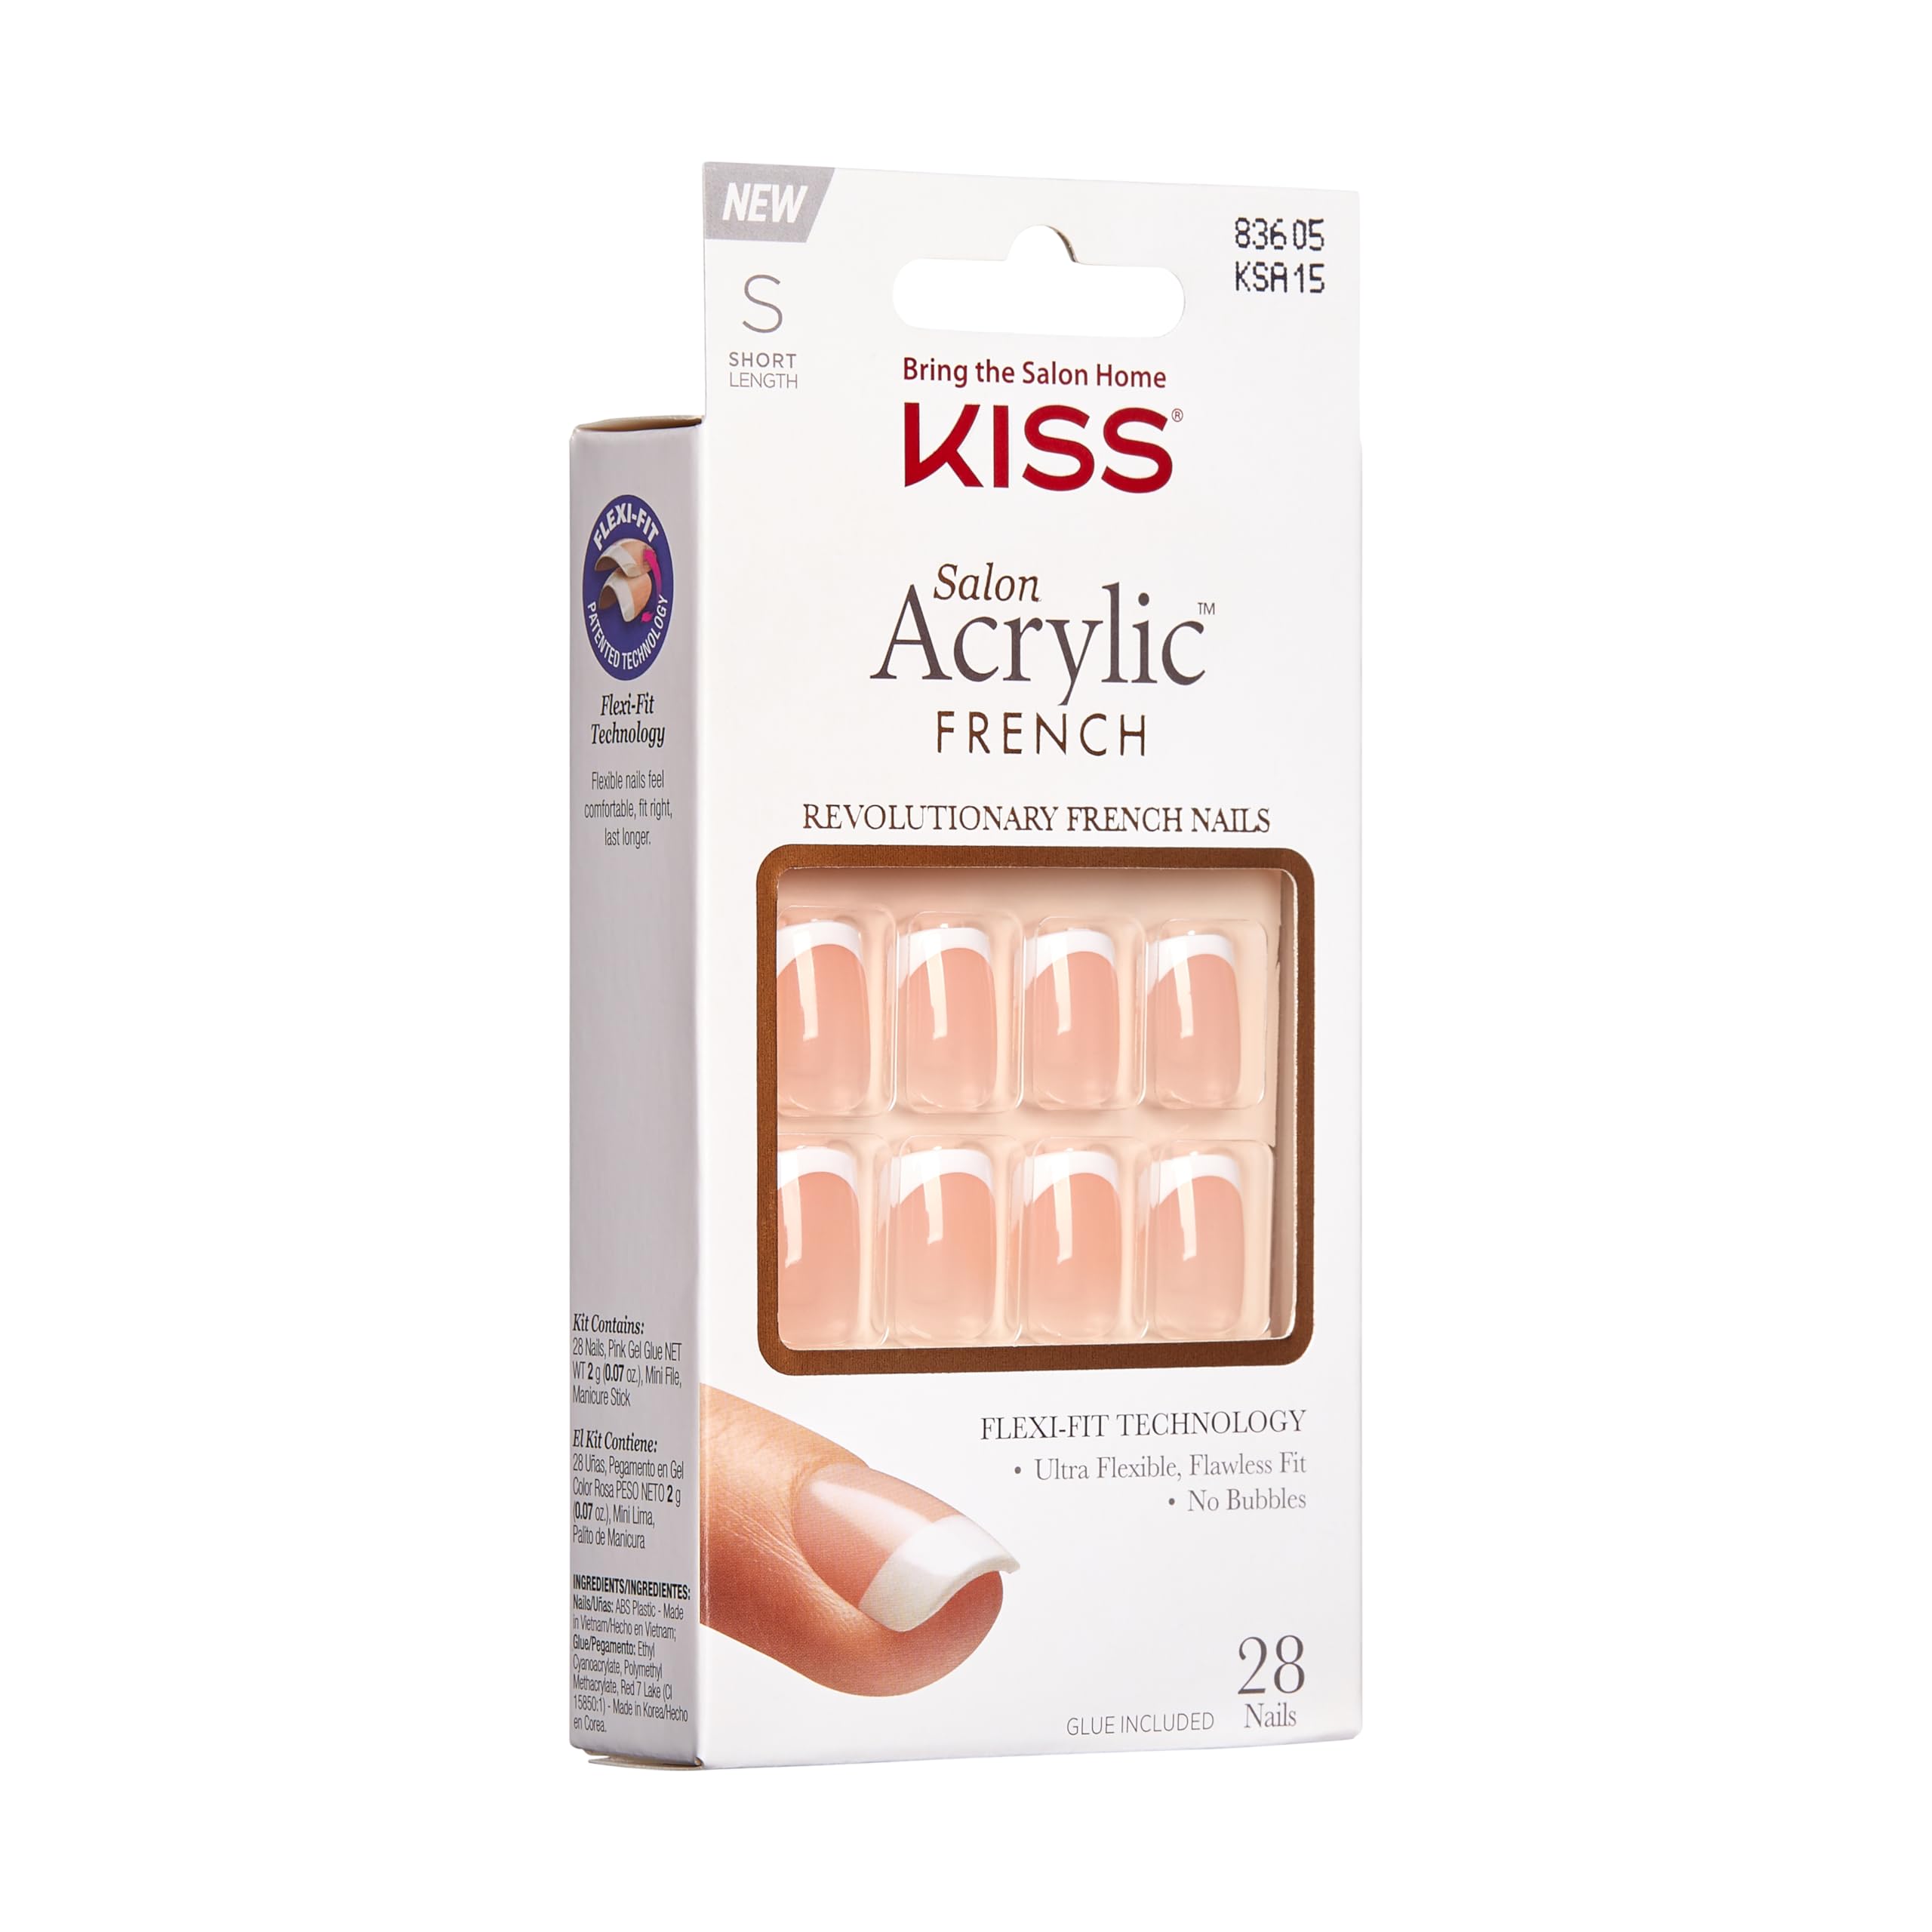 KISS Salon Acrylic Press On Nails, Nail glue included, 'Bonjour', Nude/ White, Short Size, Squoval Shape, Includes 28 Nails, 2g Glue, 1 Manicure Stick, 1 Mini File